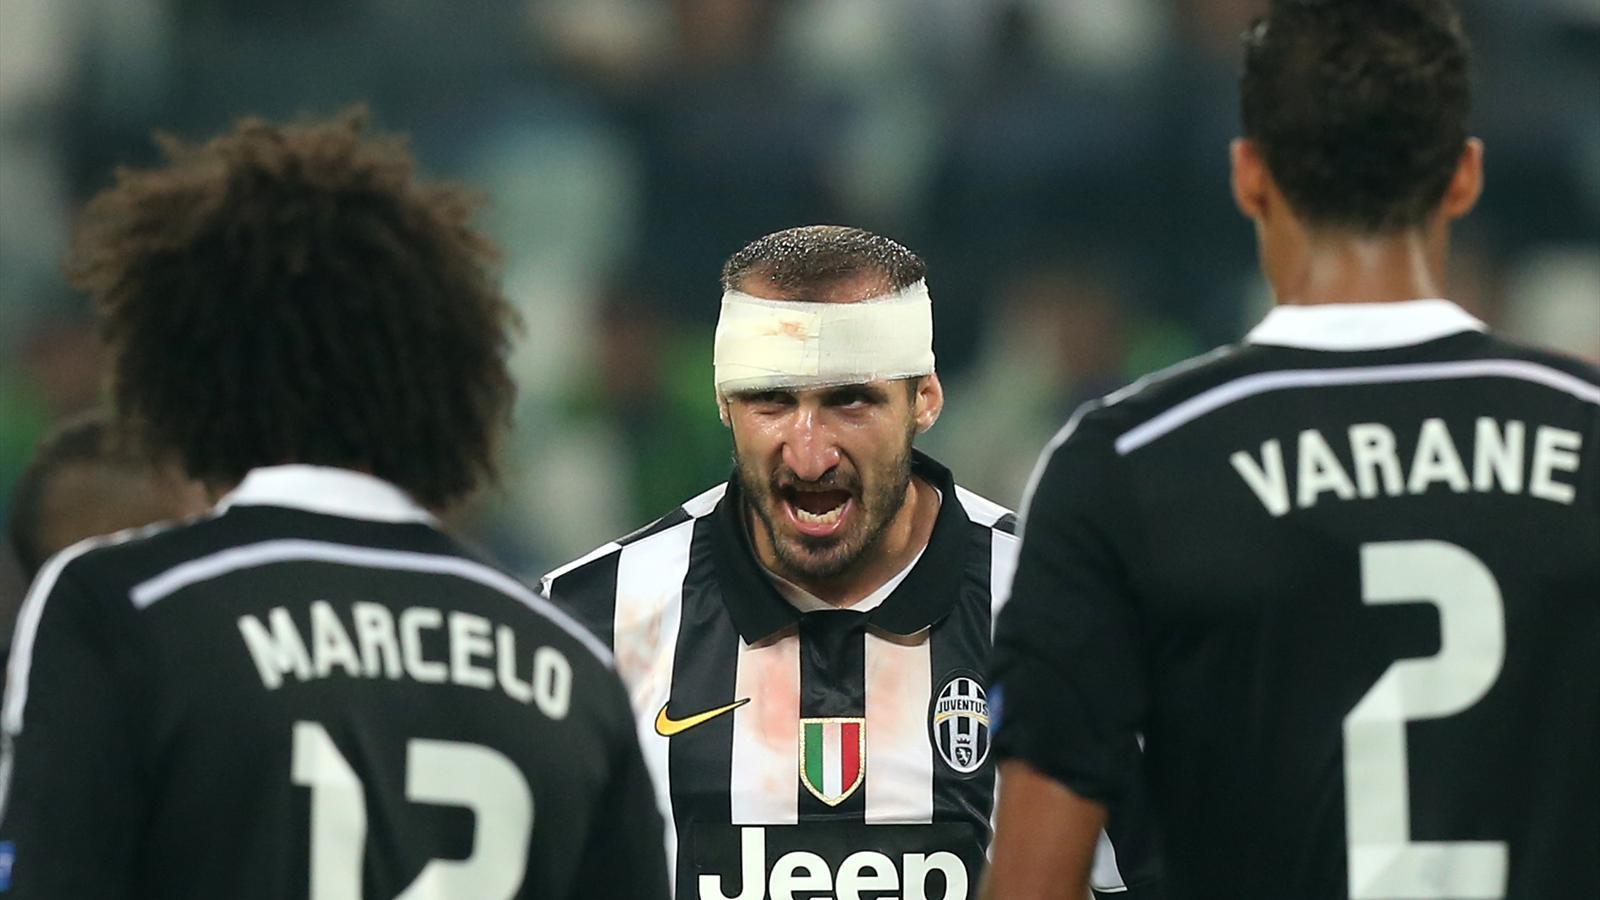 PsBattle: Giorgio Chiellini in yesterday's game betwen Juventus